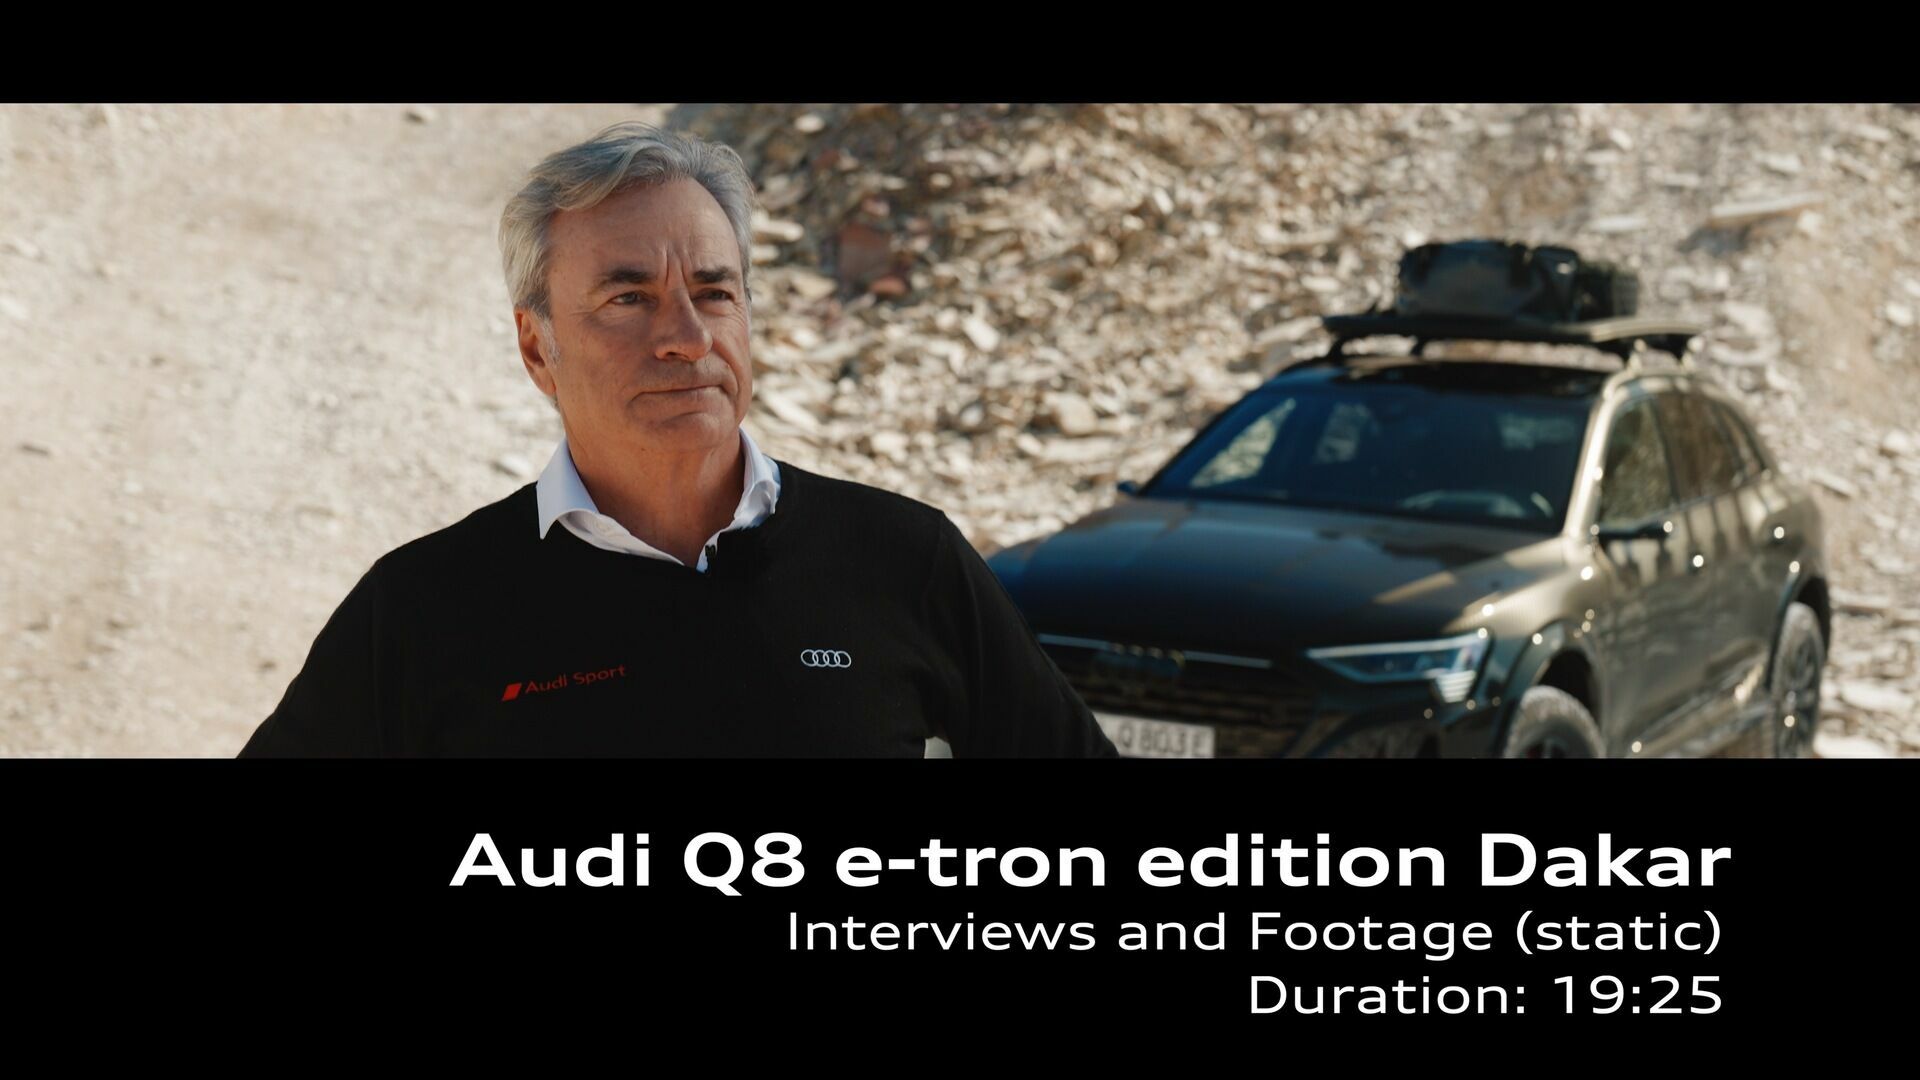 Statements from Carlos Sainz and Fermín Soneira Santos on the Audi Q8 e-tron edition Dakar – Footage